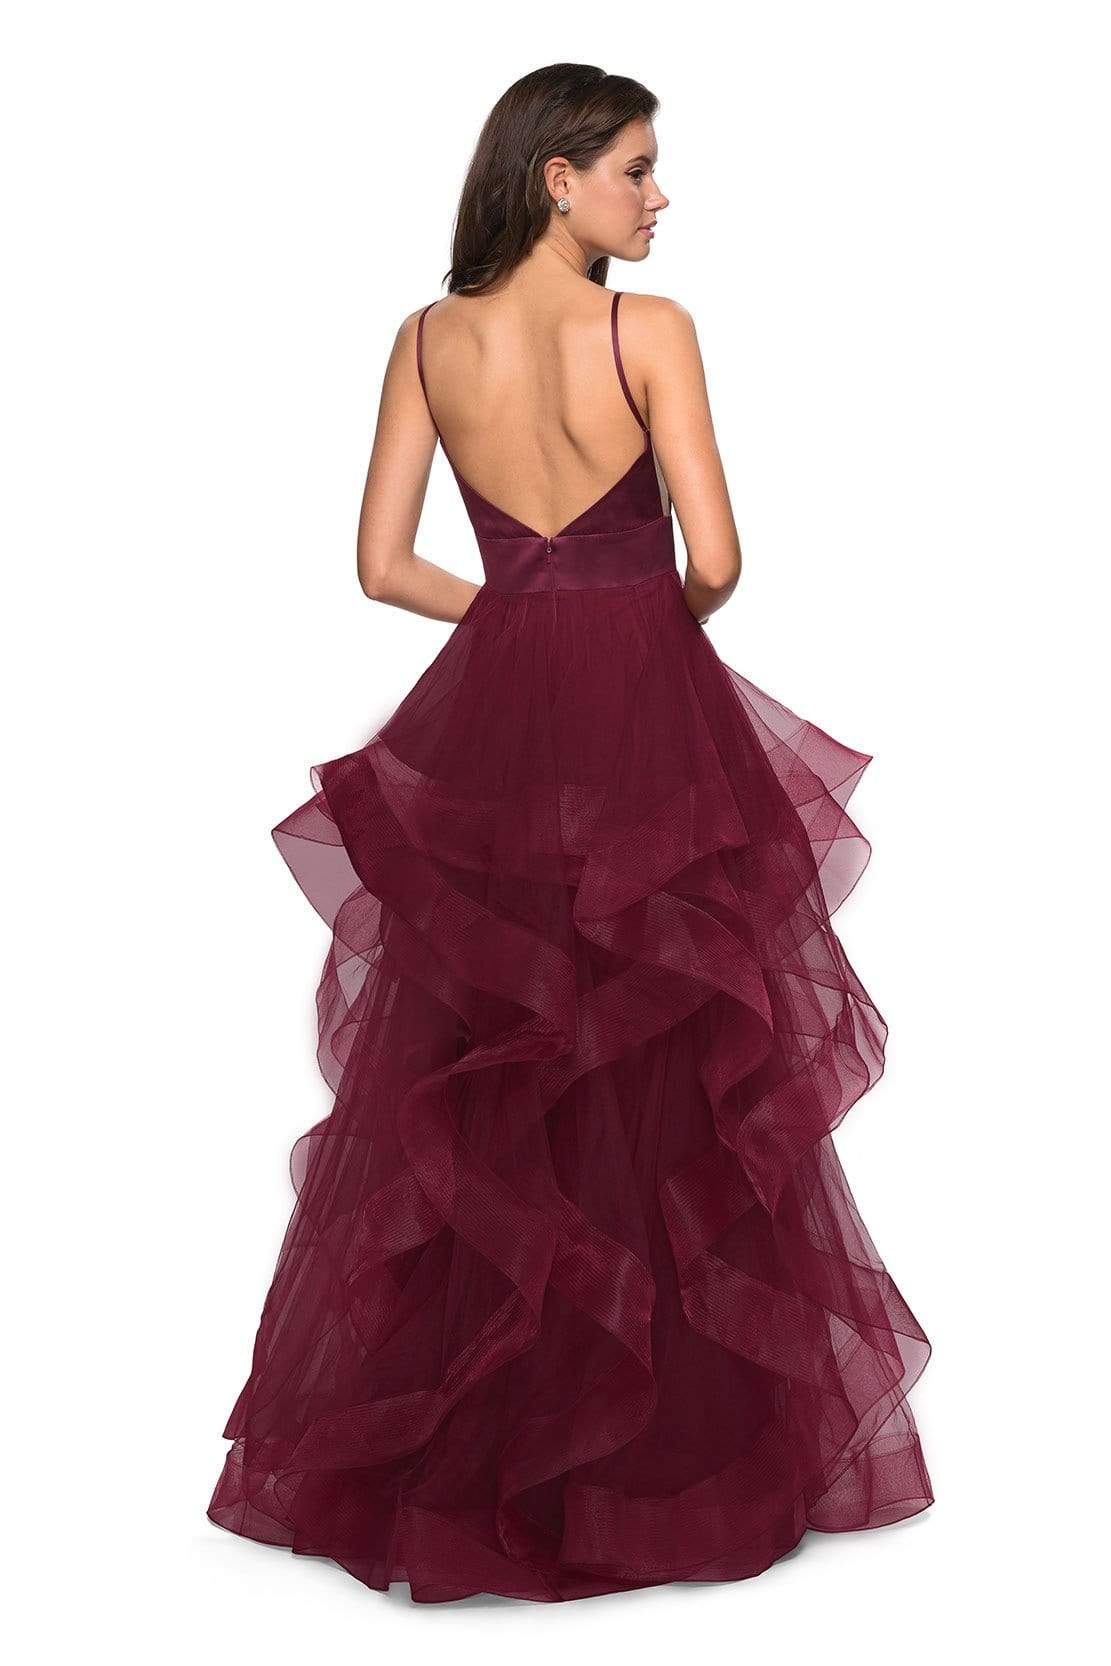 La Femme - 27024 Sleeveless Plunging Illusion Neckline Ruffles Ballgown Special Occasion Dress